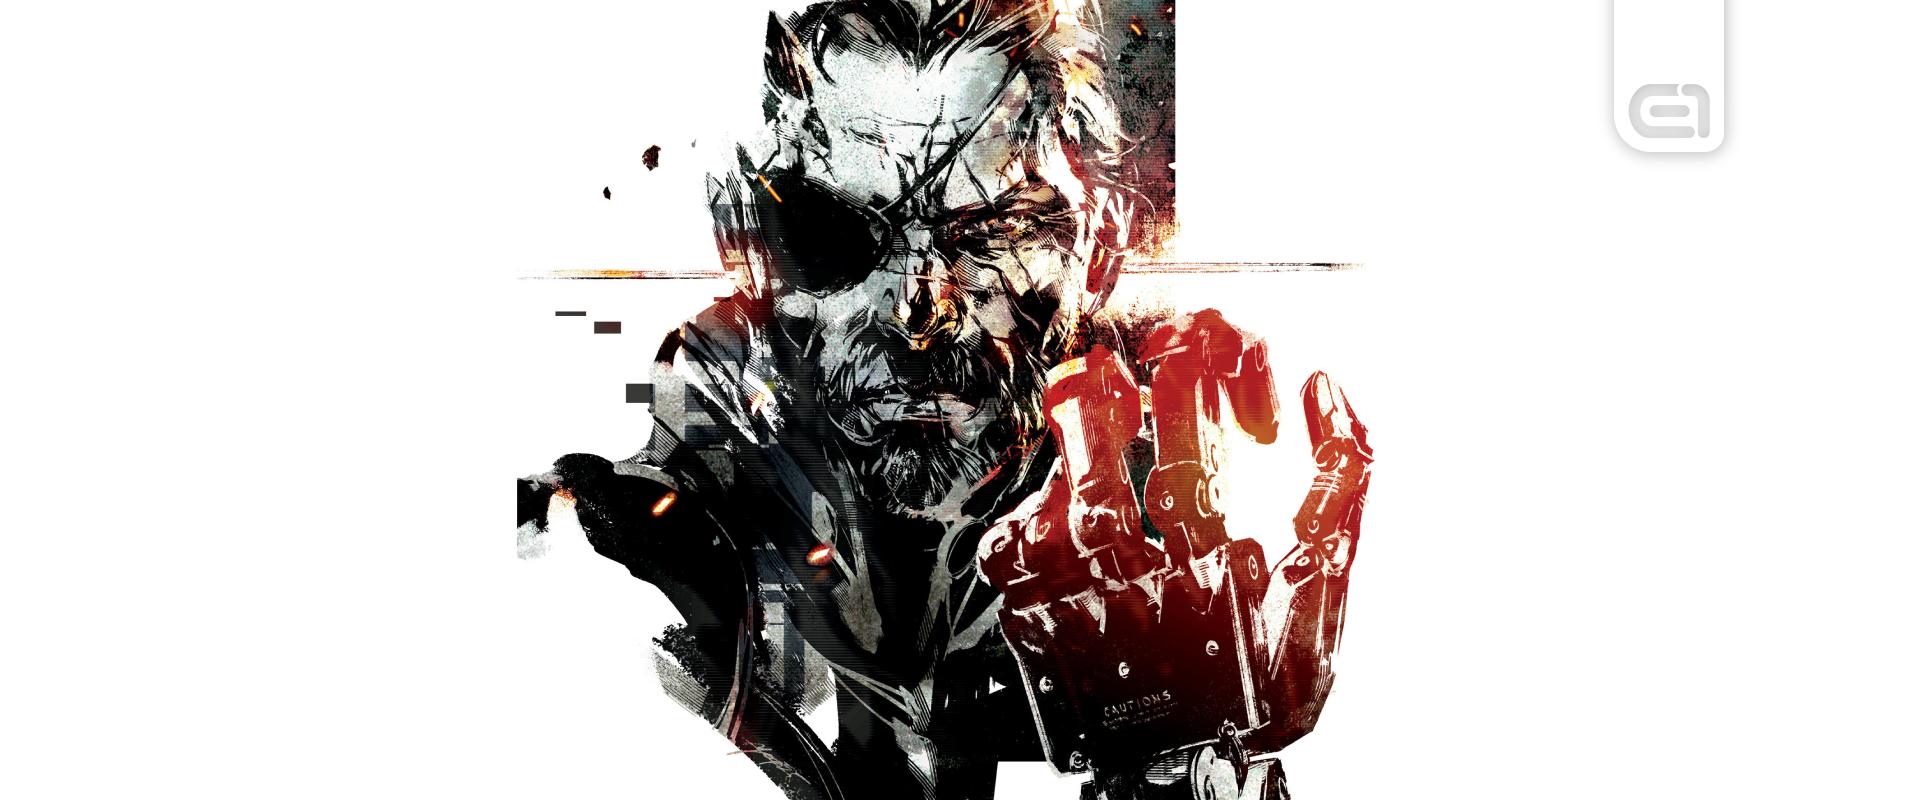 Visszatér Kojima remekműve, a Metal Gear Solid Snake Eater